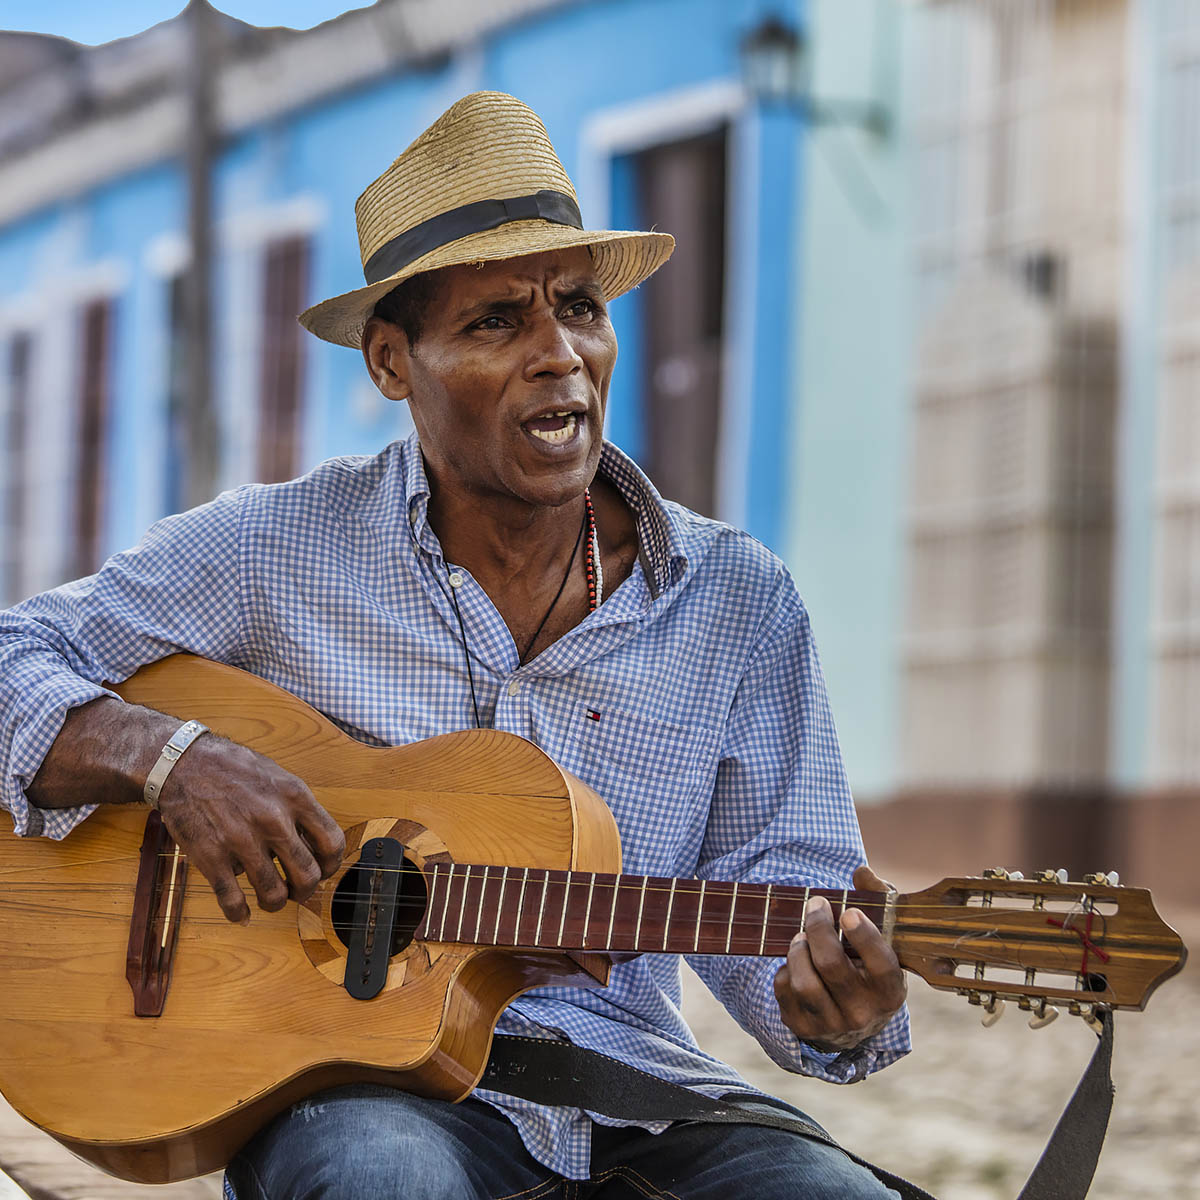 A CUBAN man plays traditional music on his guitar - TRINIDAD, CUBA